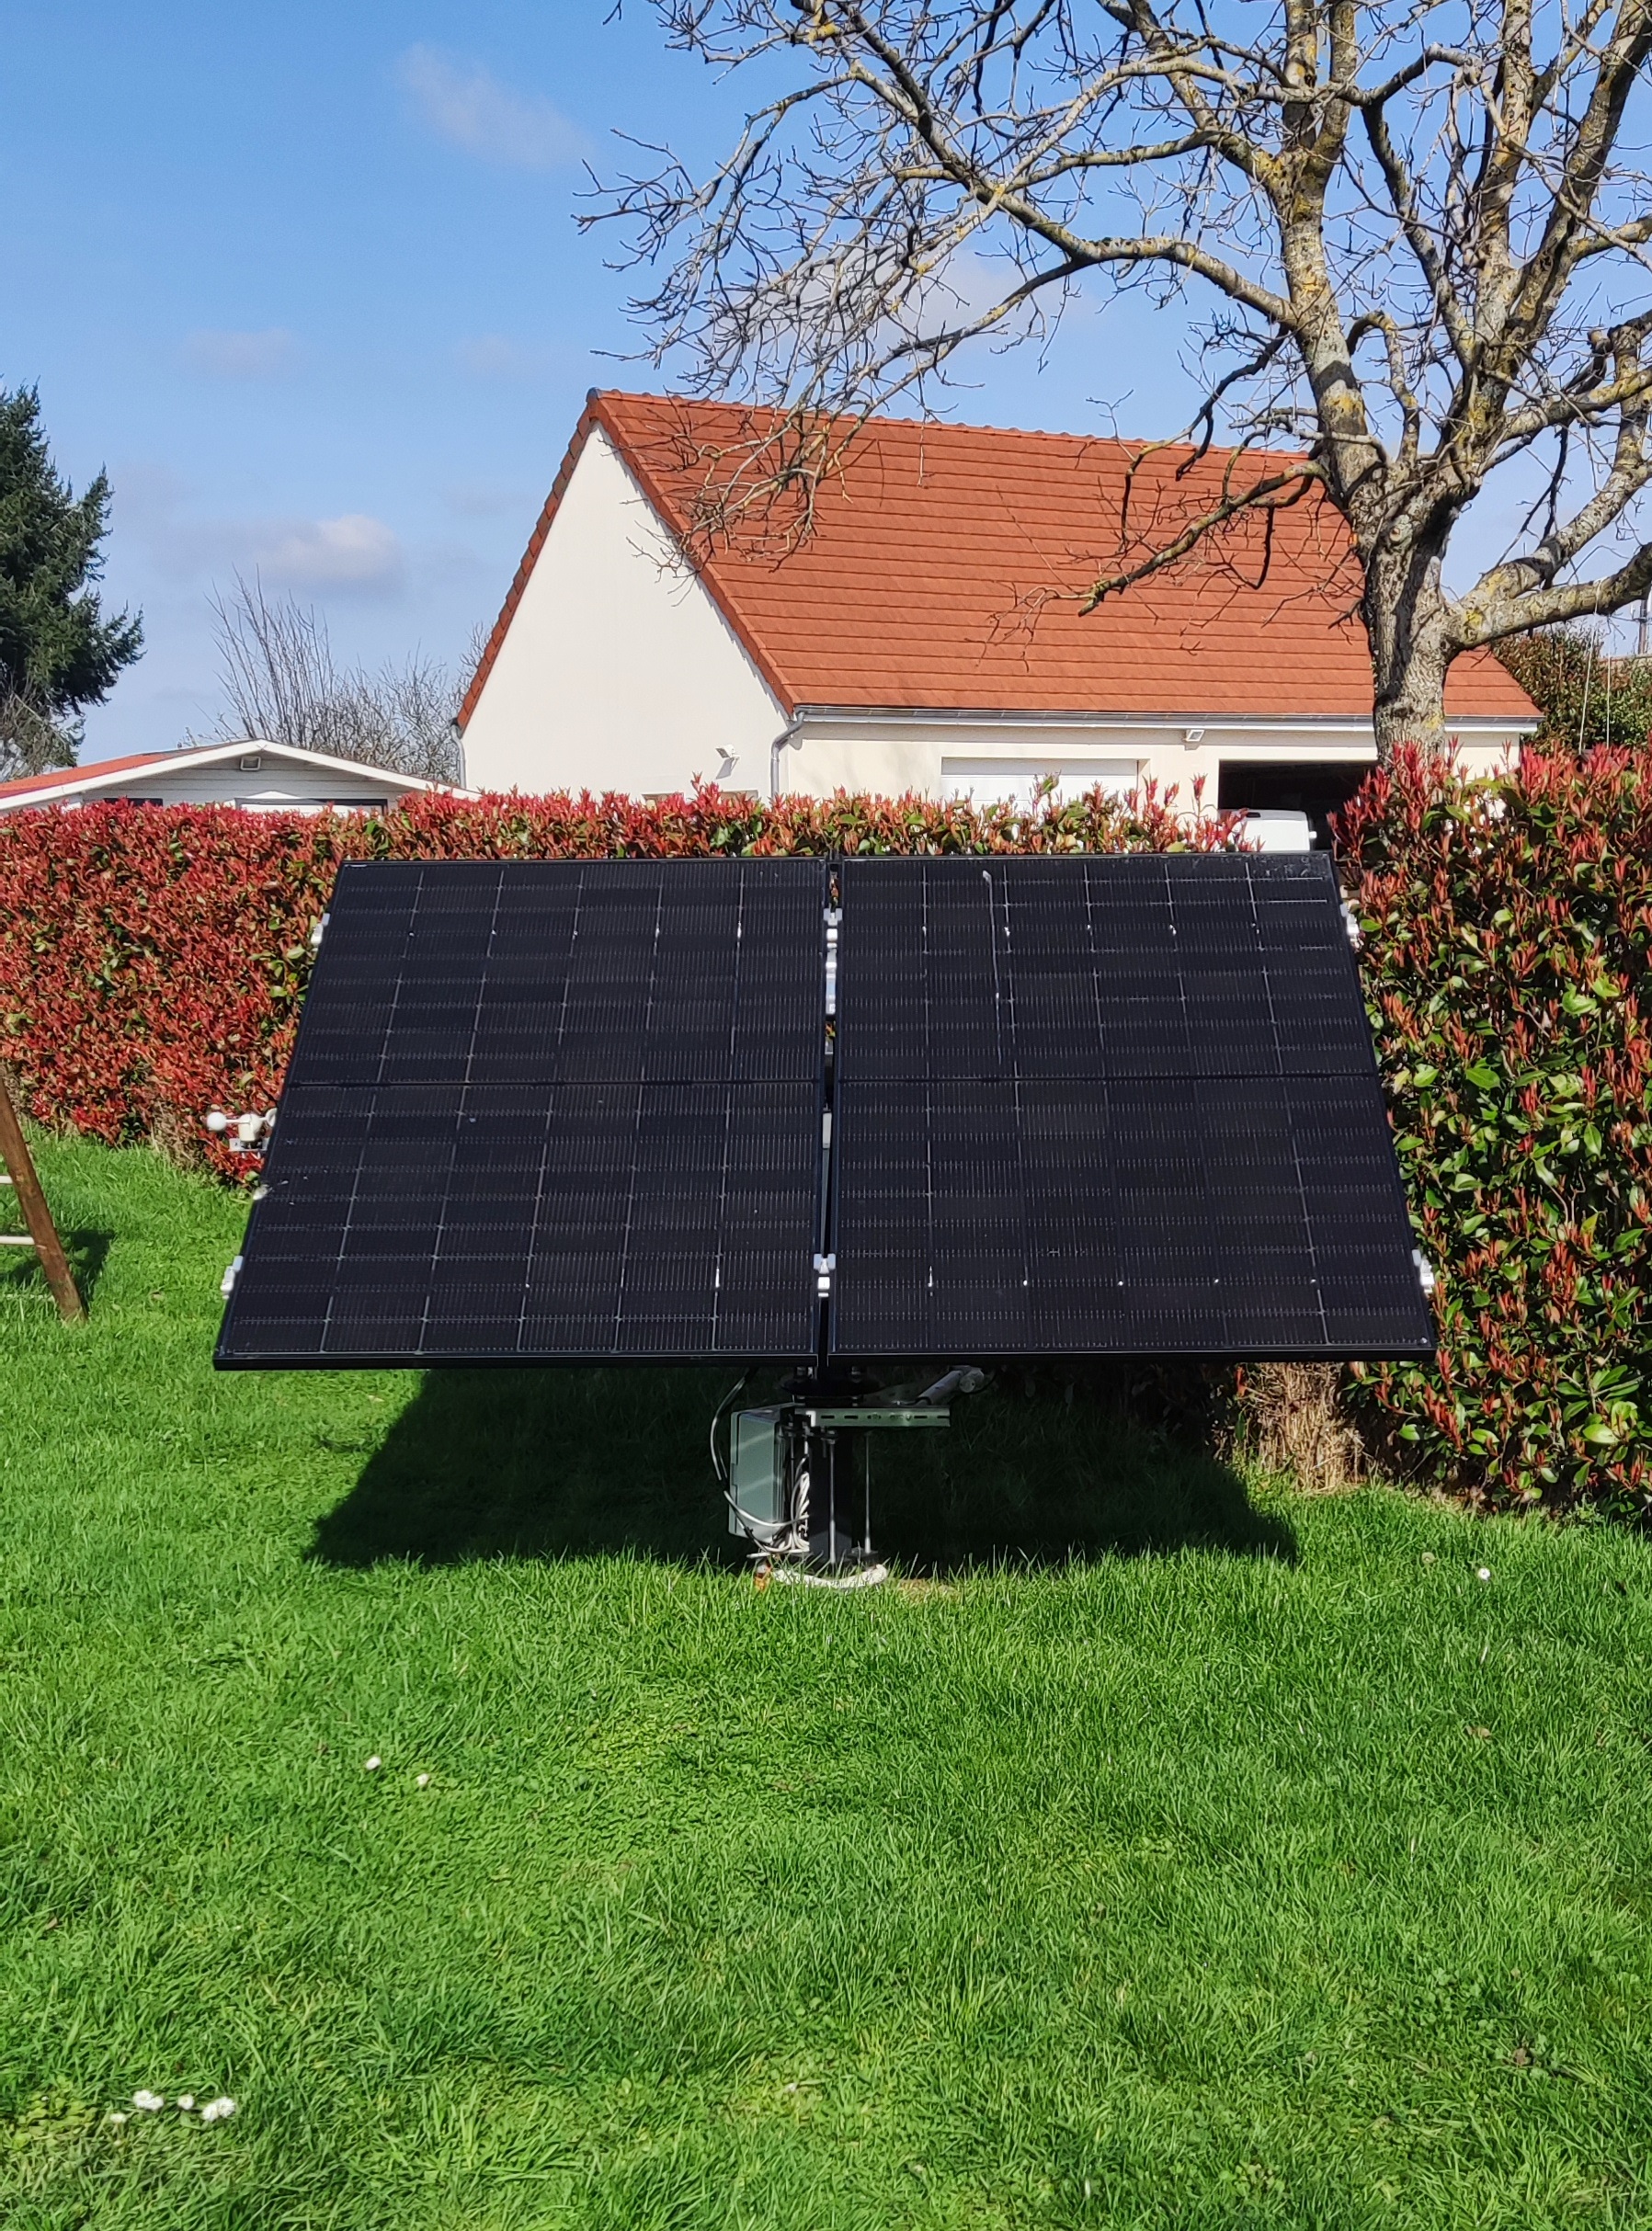 Smart Solar Tracker – The Project